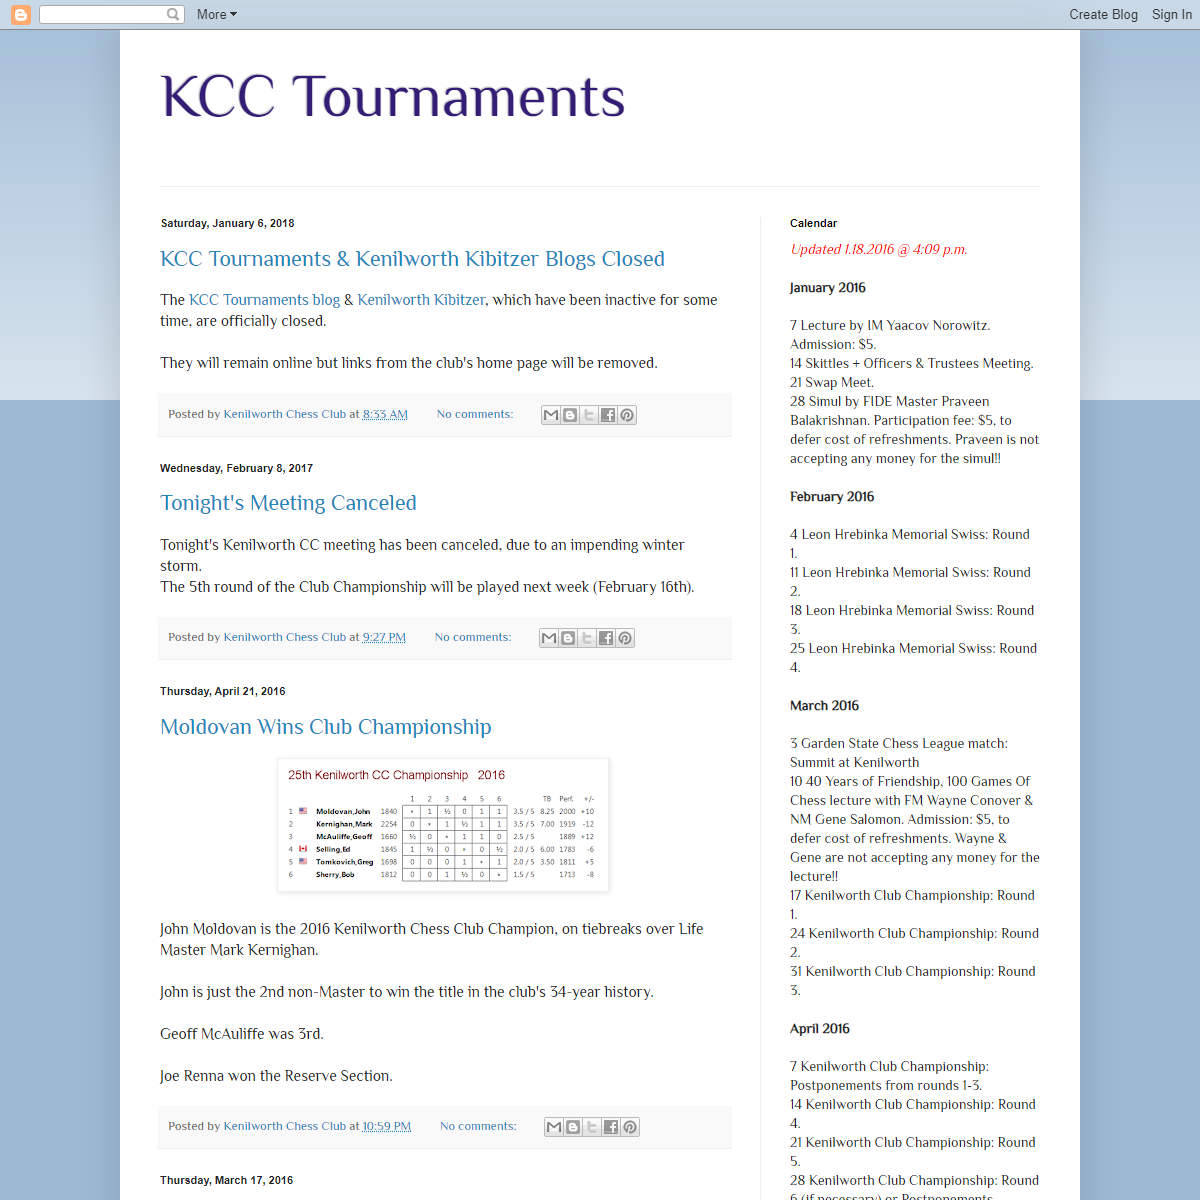 KCC Tournaments